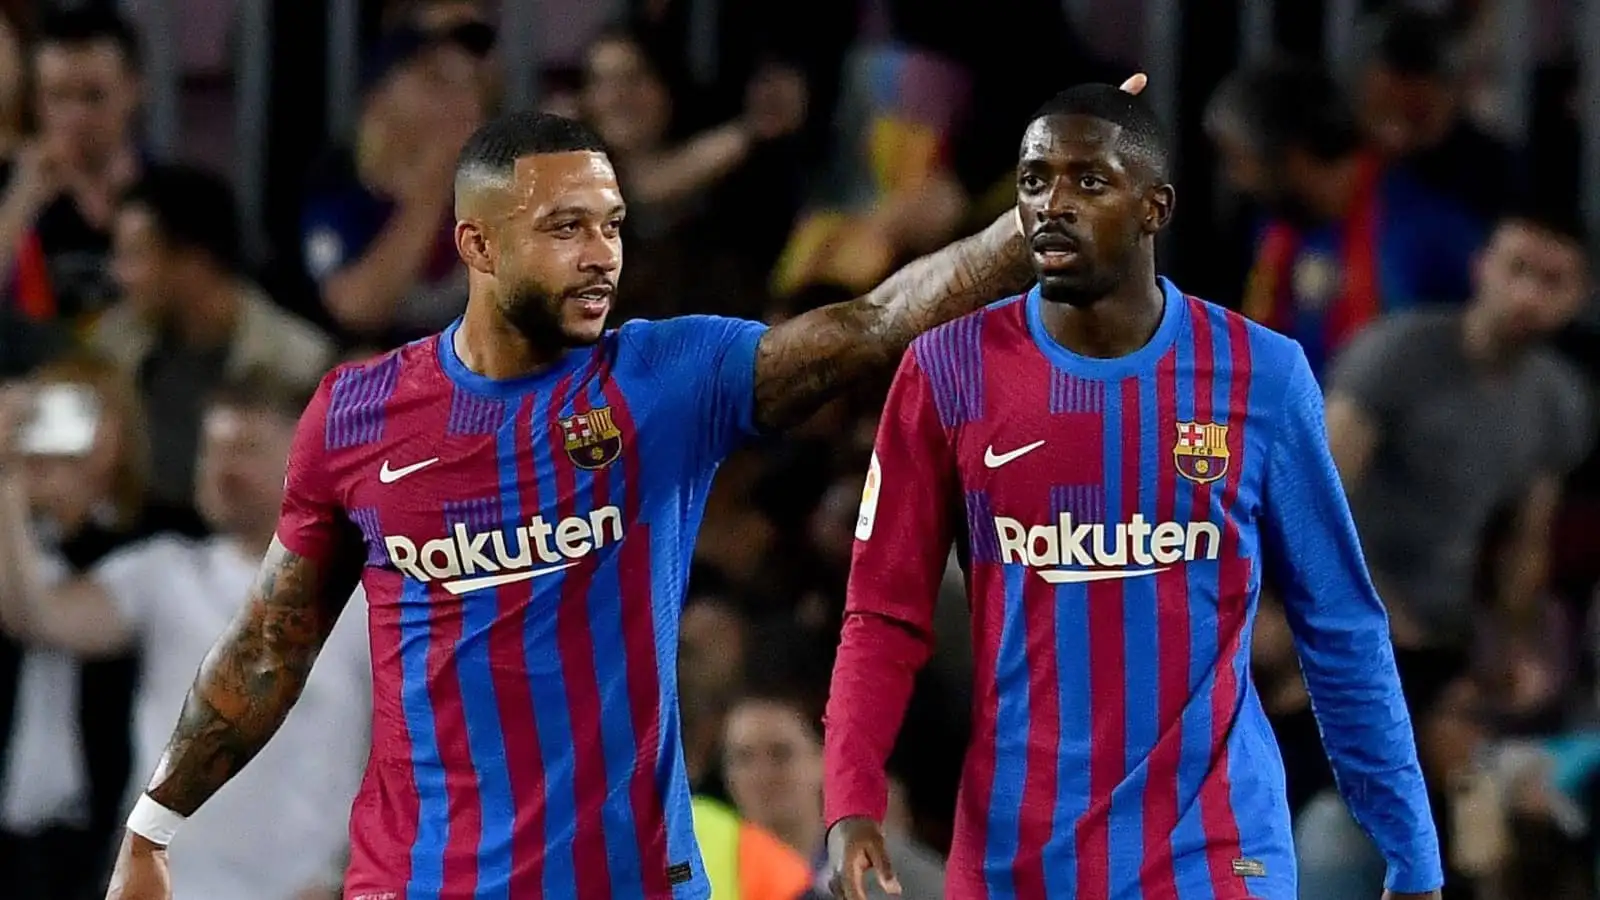 Barcelona players Memphis Depay and Ousmane Dembele